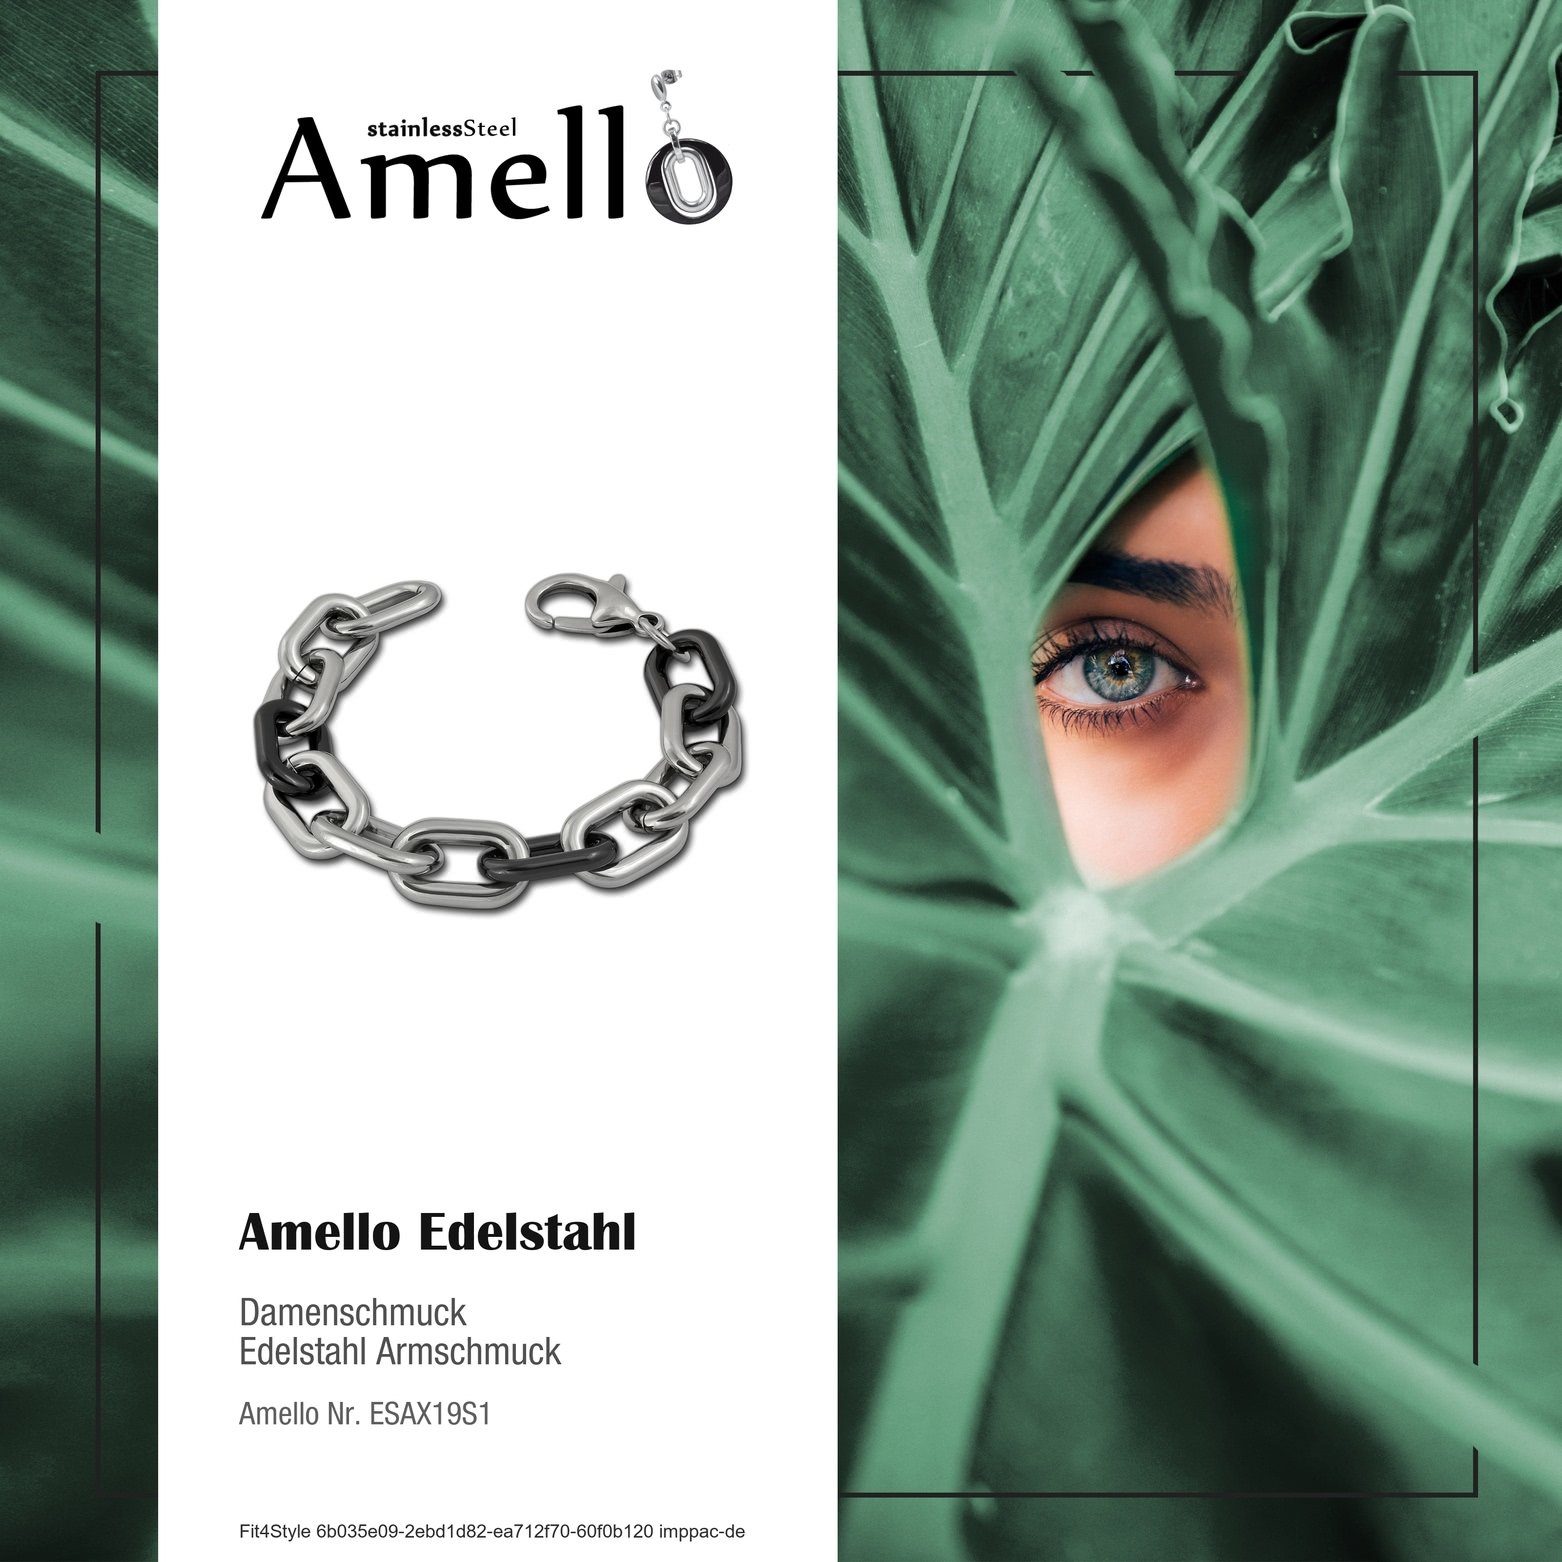 Glieder (Armband), Armband Armbänder Amello (Stainless Damen silber Edelstahl Edelstahlarmband Amello Steel) für